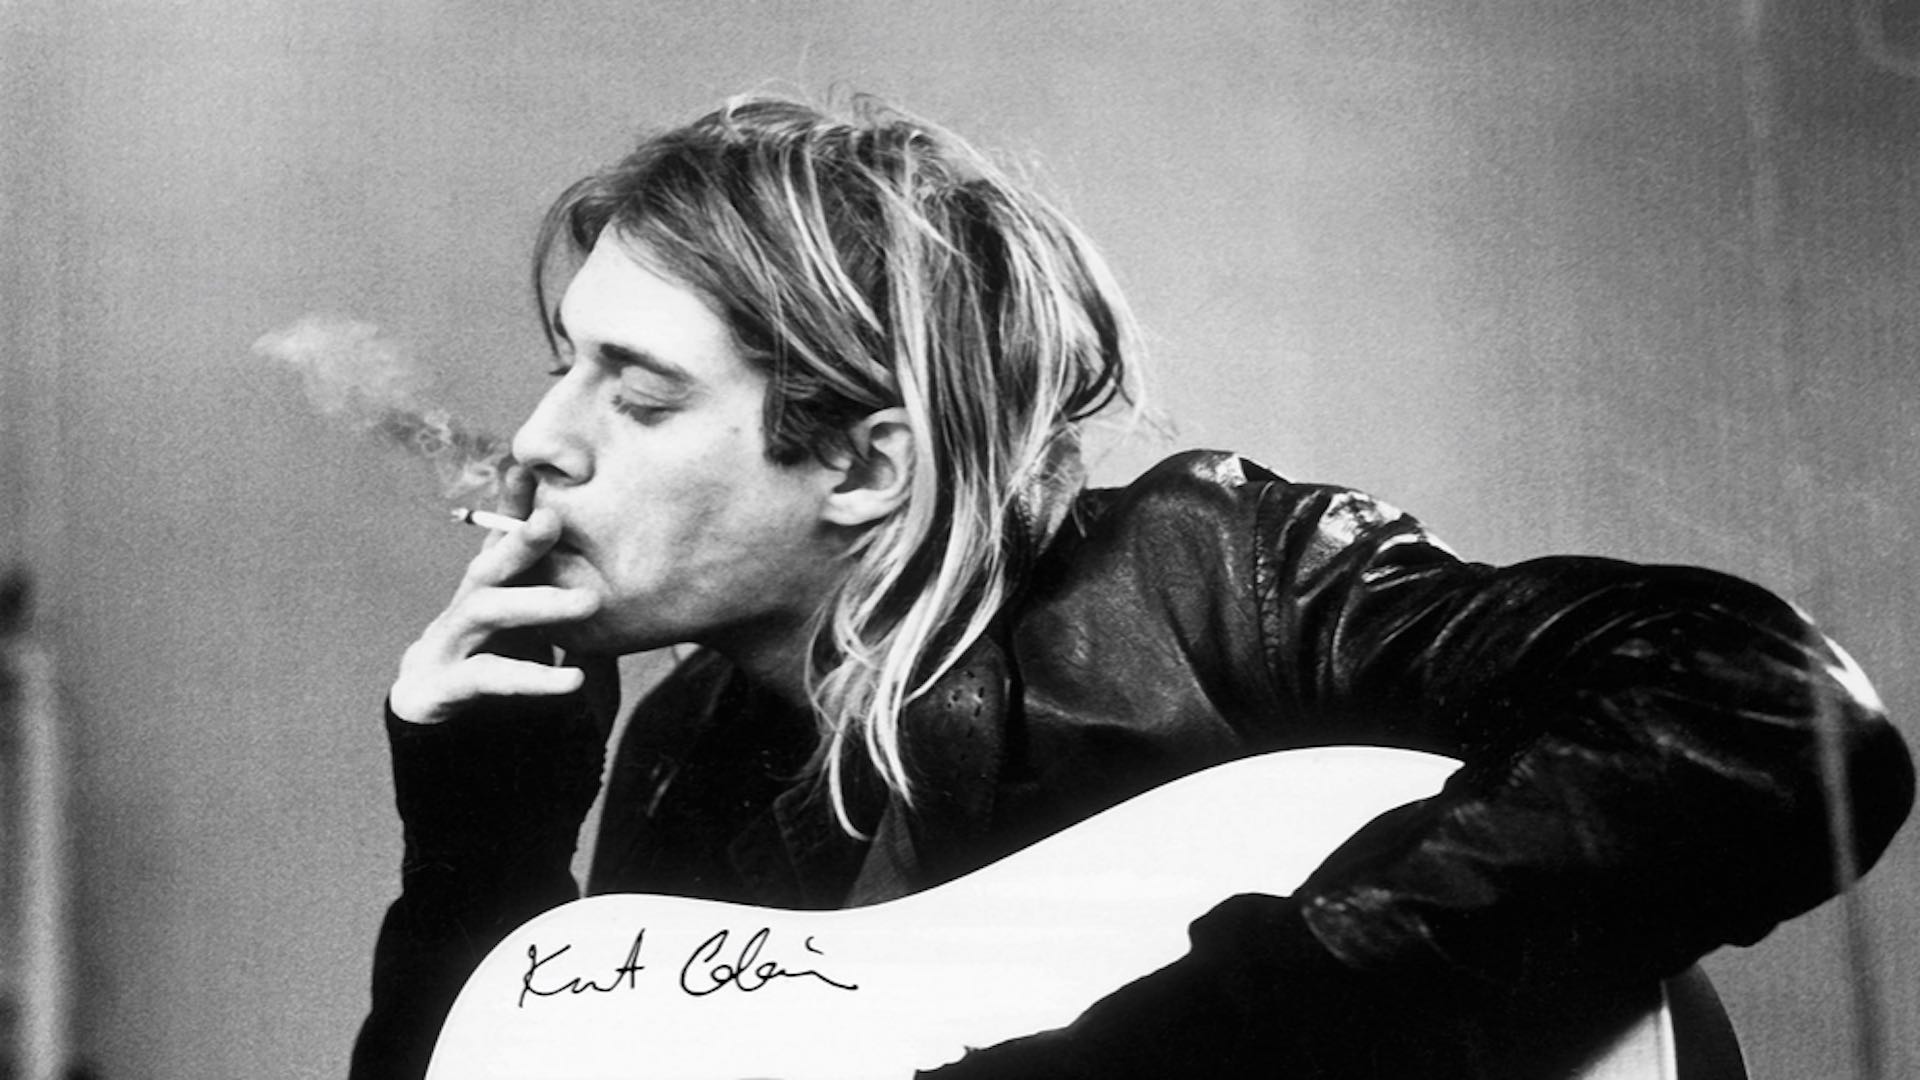 Las últimas fotos tomadas a Kurt Cobain serán subastada en NFT